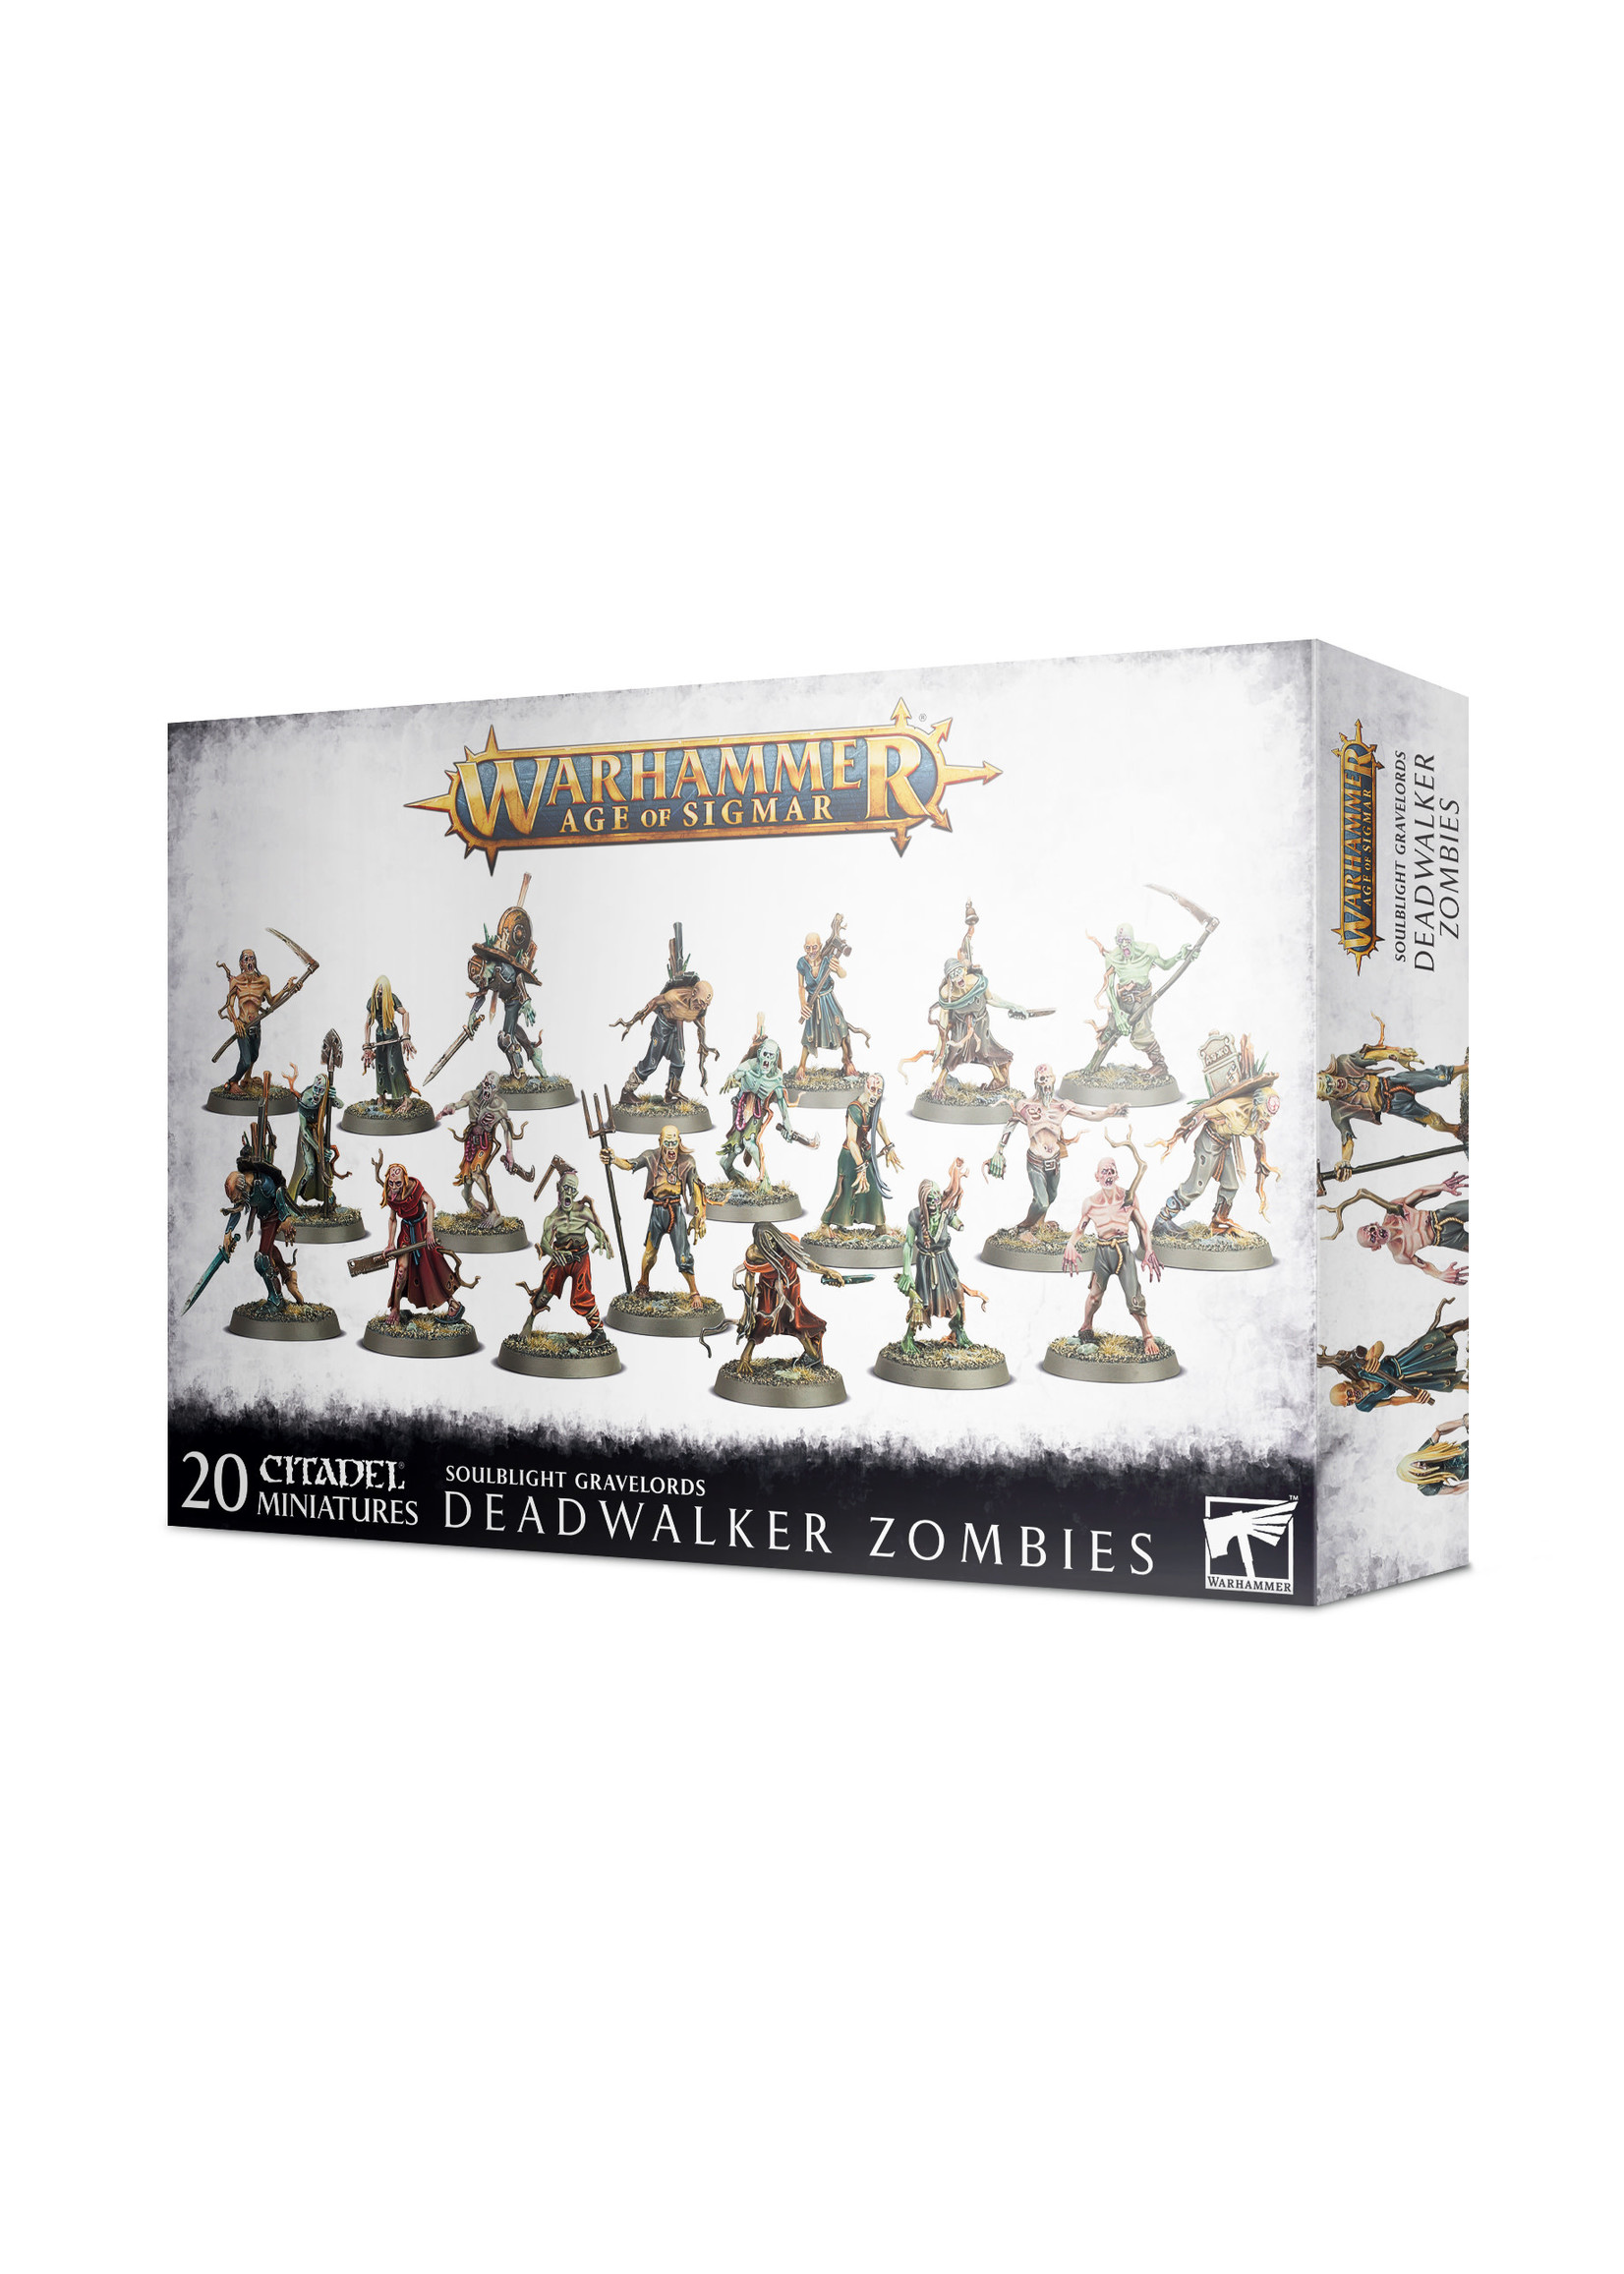 Games Workshop Deadwalker Zombies - Soulblight Gravelords - Warhammer Age of Sigmar